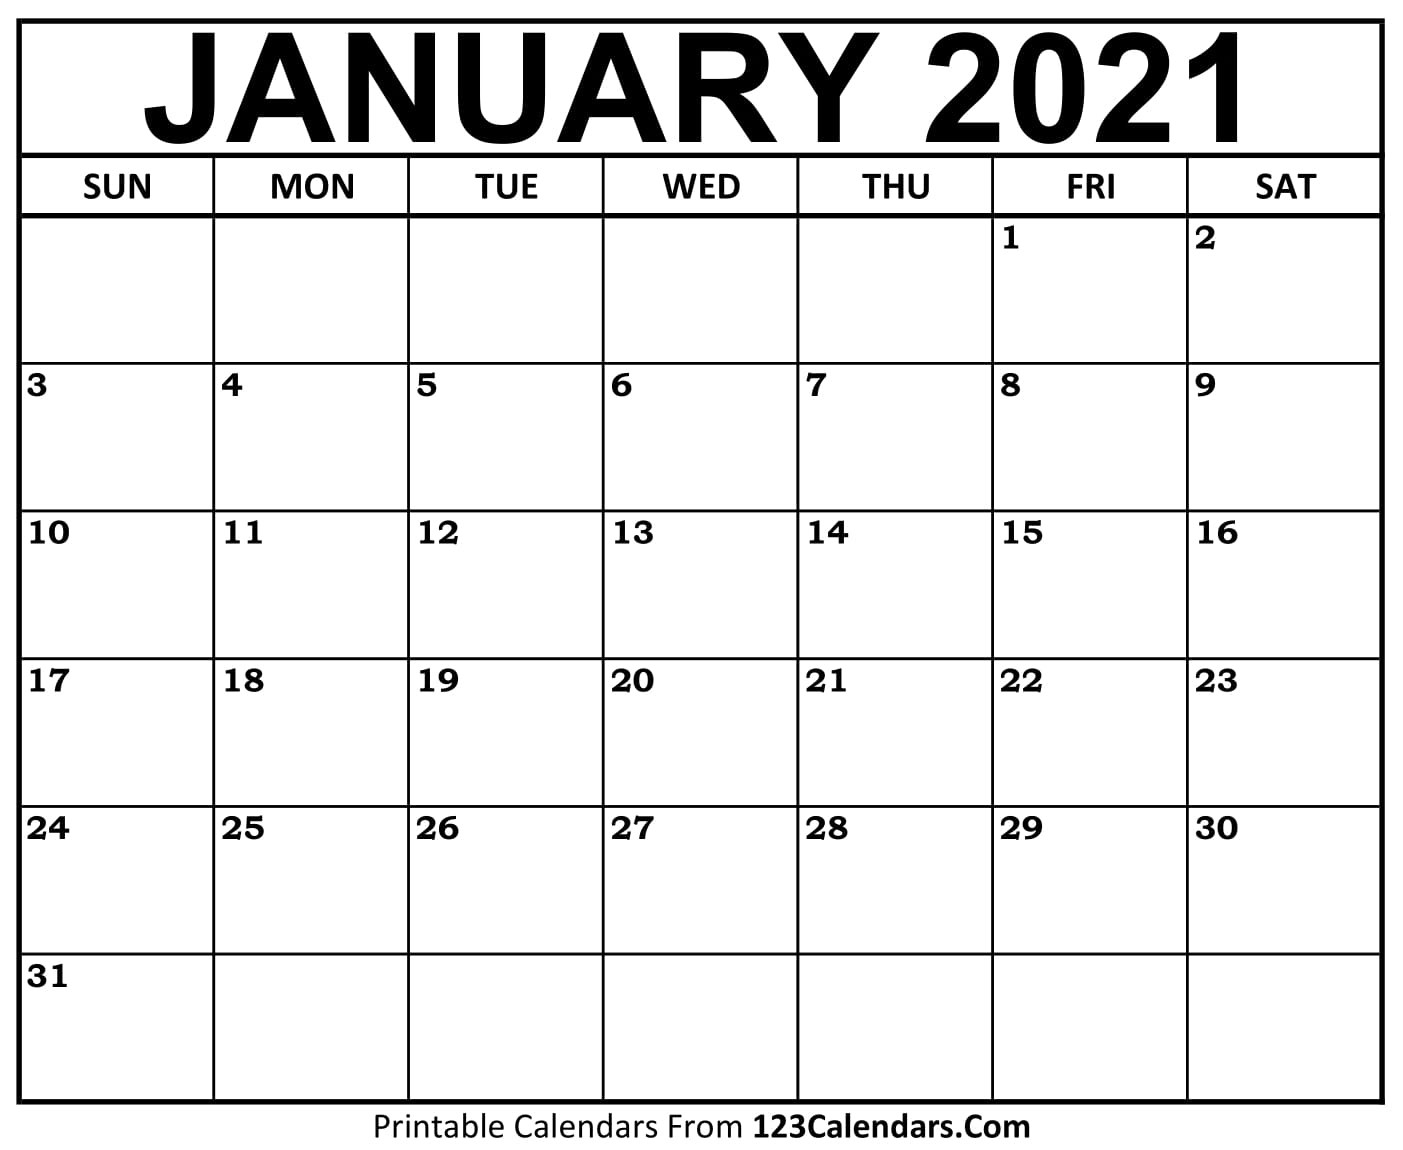 Printable January 2021 Calendar Templates | 123Calendars-Big Calendar 2021 Template To Fill Out